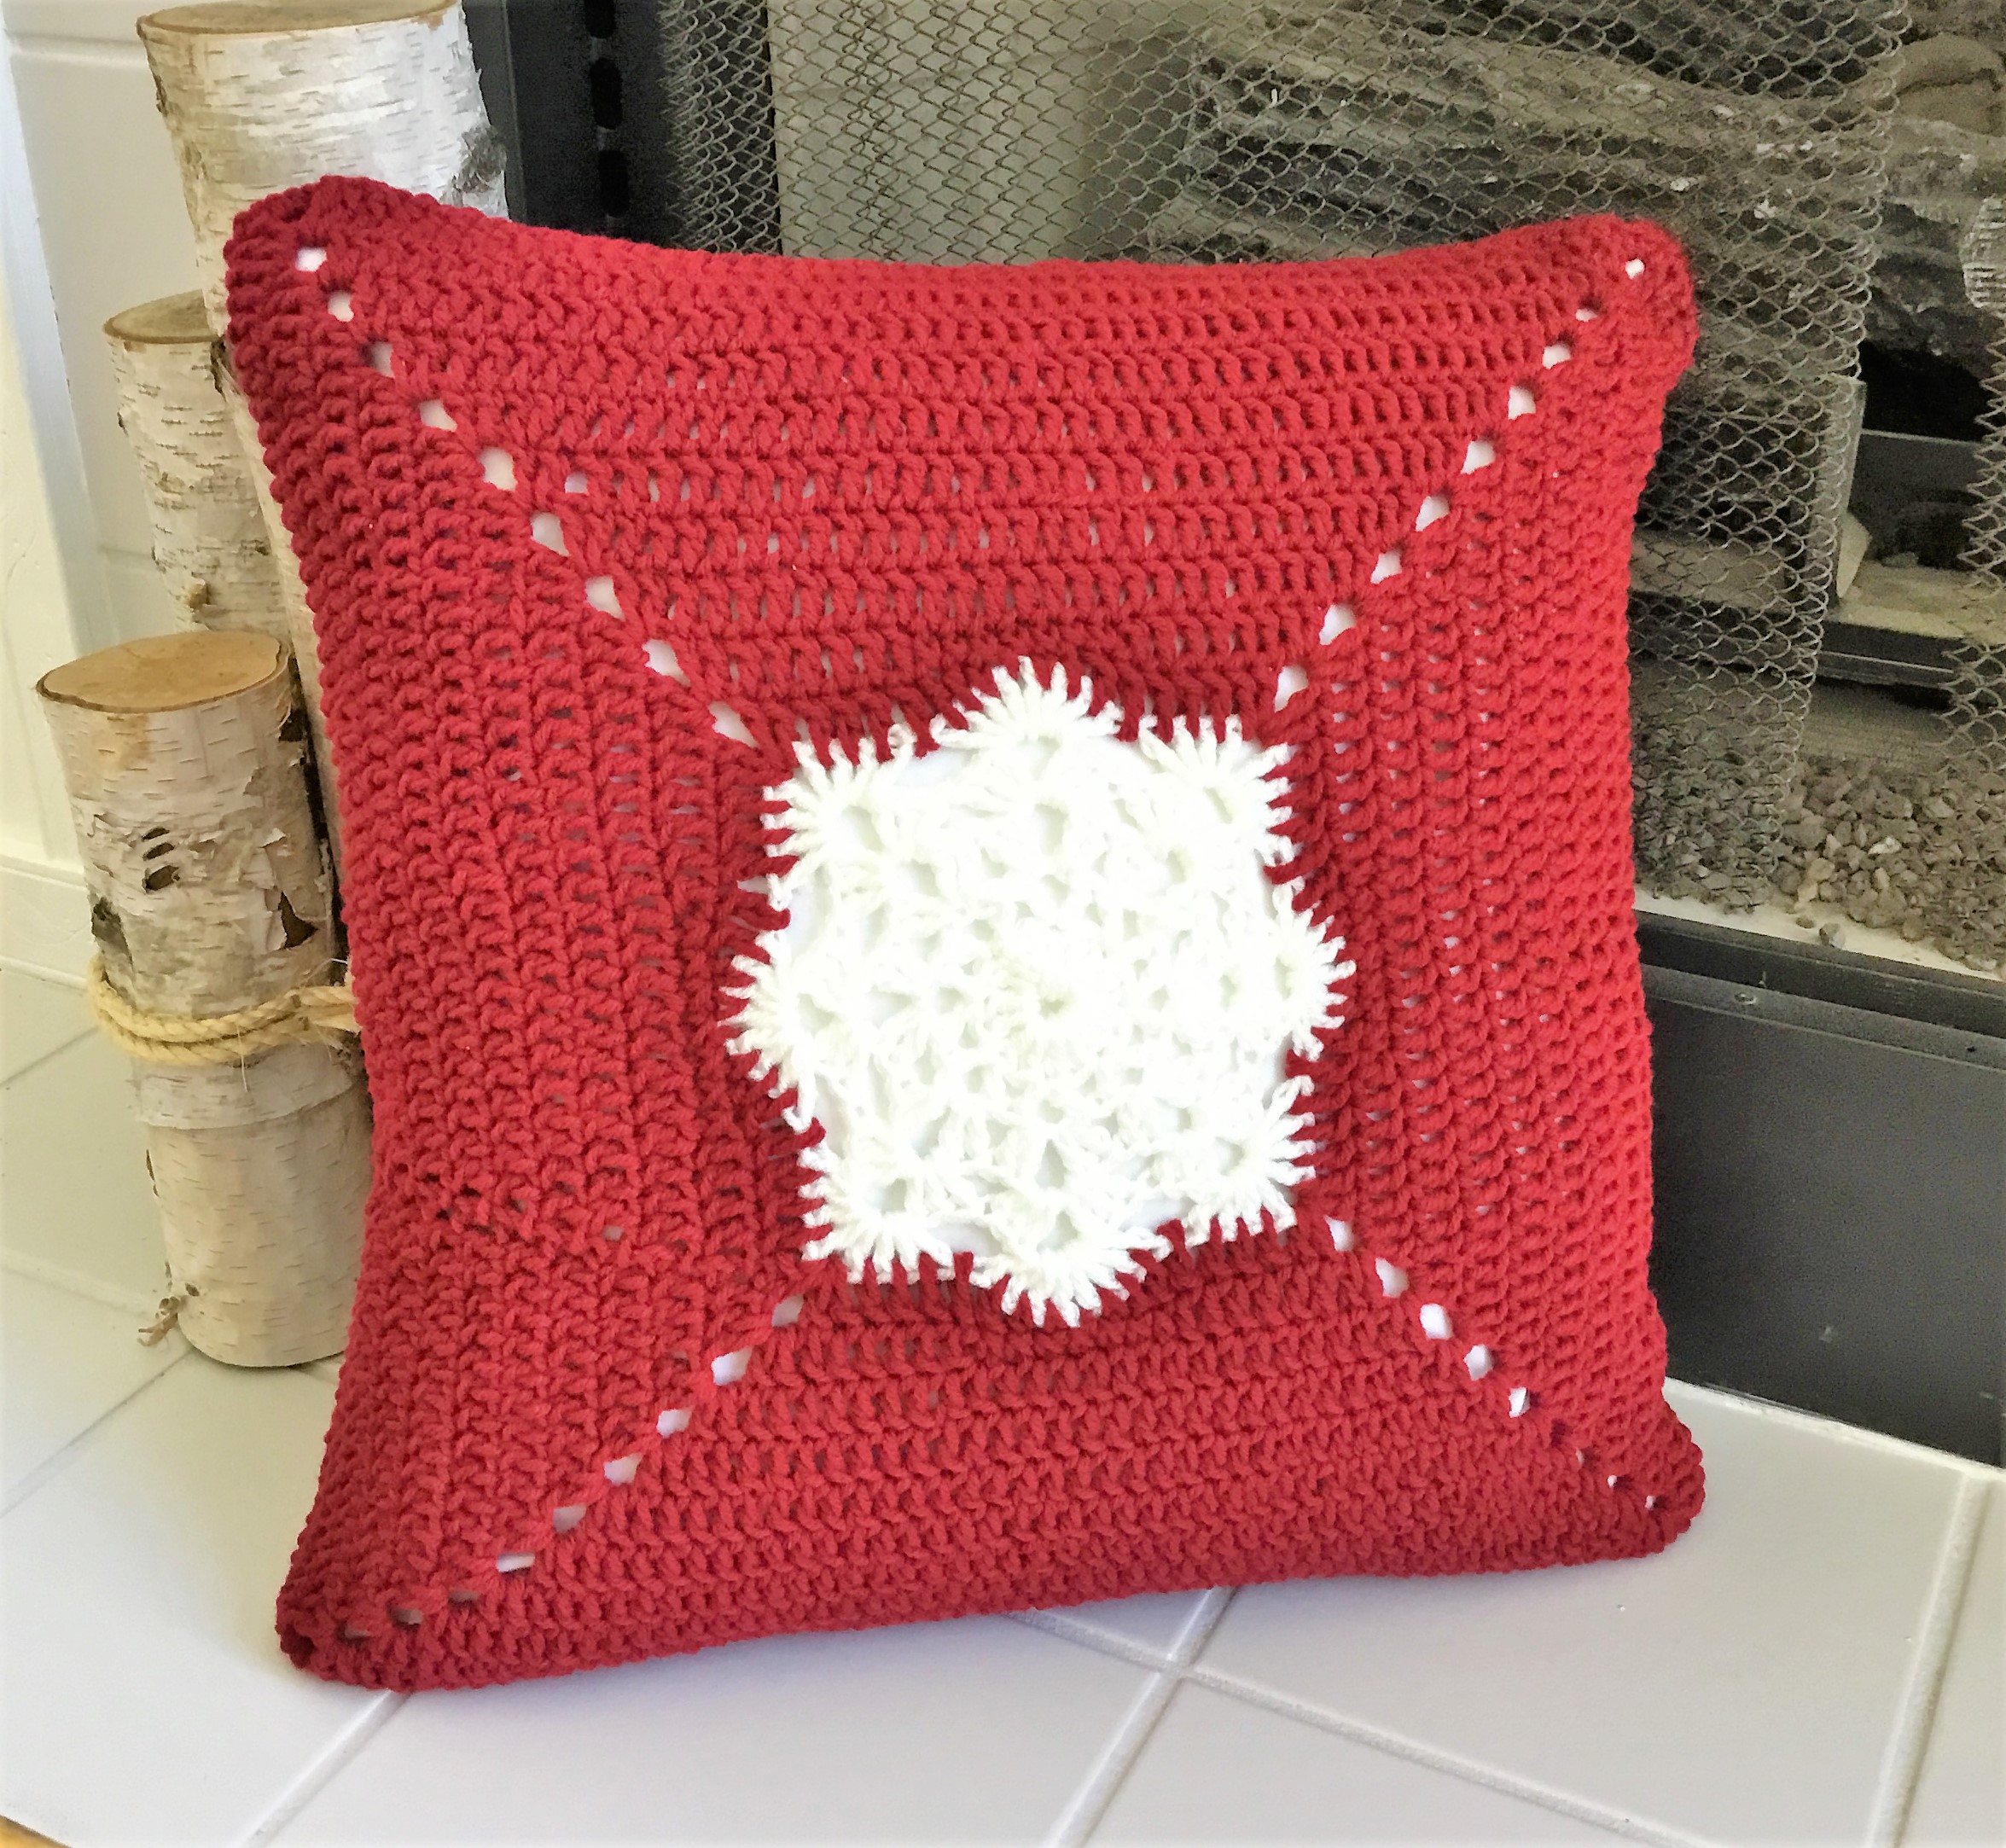 15 Easy Free Crochet Pillow Patterns - Crazy Cool Crochet